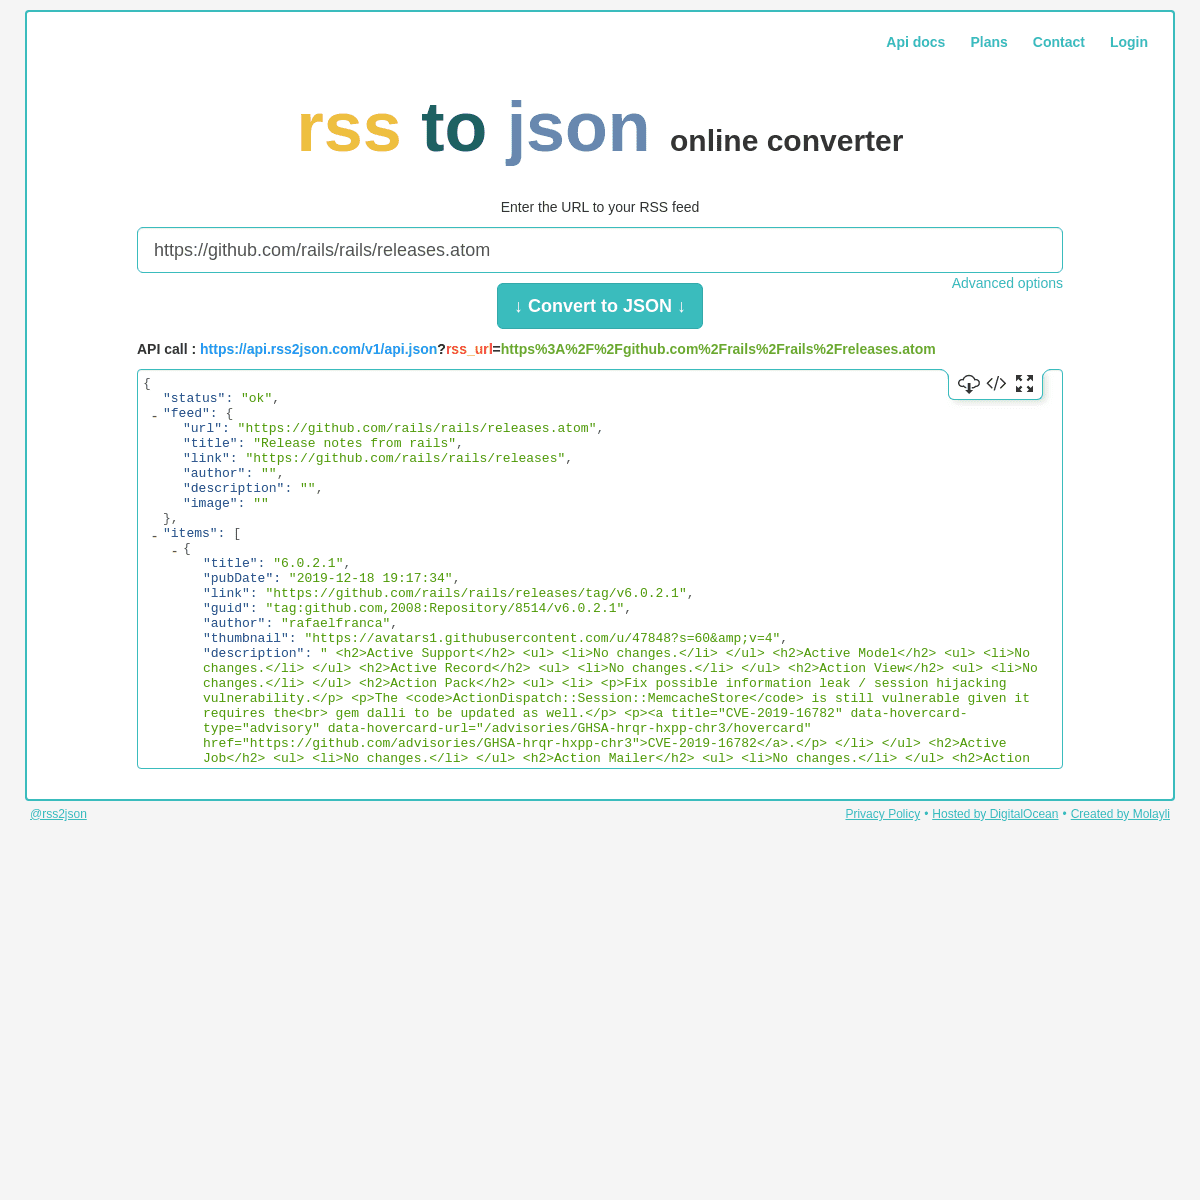 A complete backup of rss2json.com